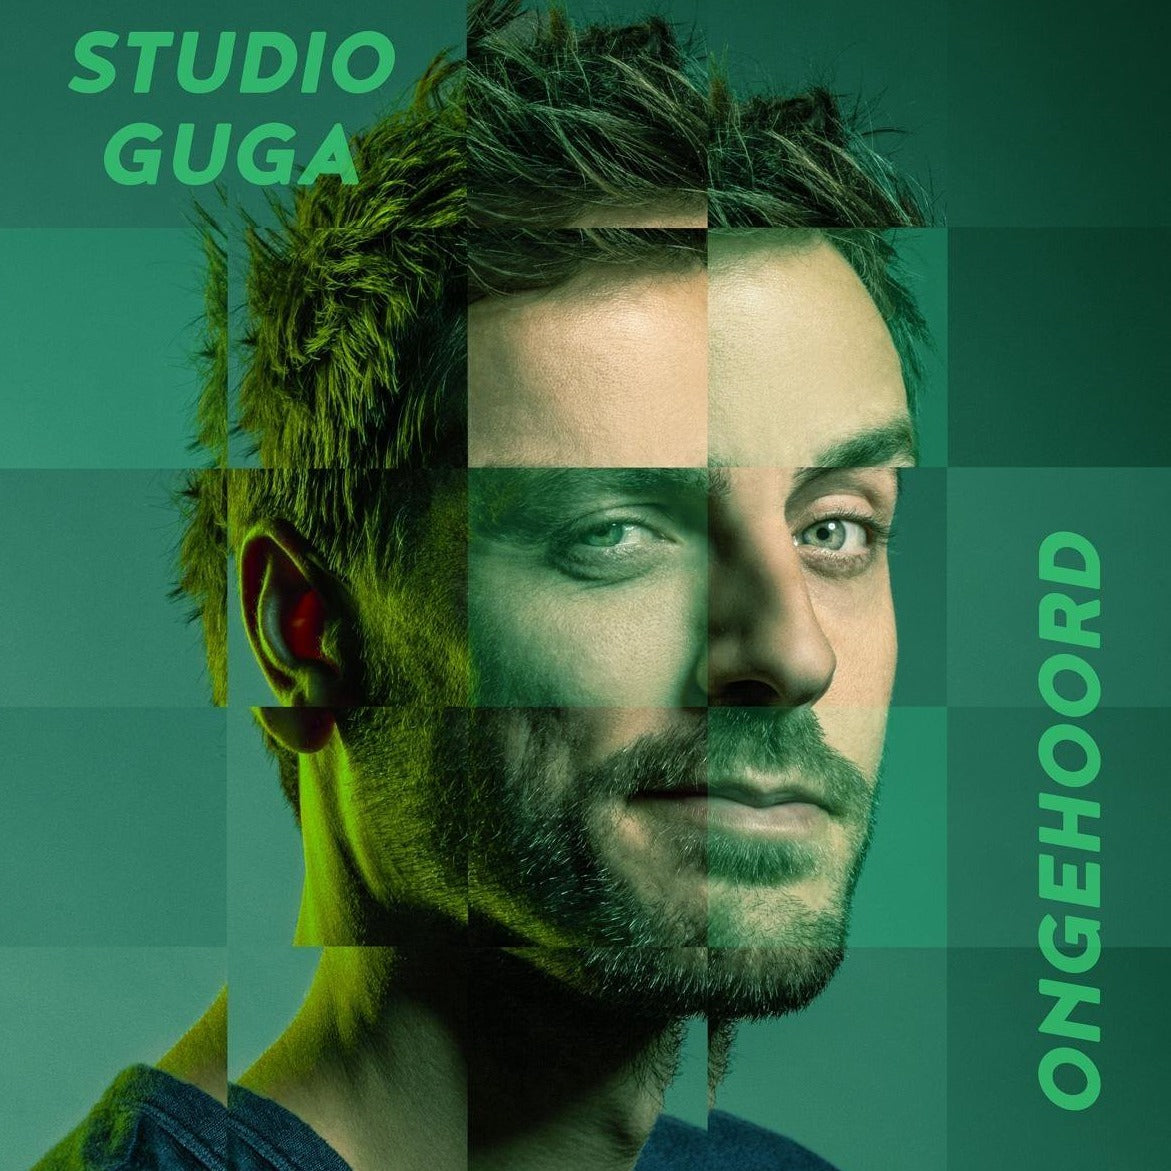 Studio Guga - "Ongehoord" (CD / 2xLP)